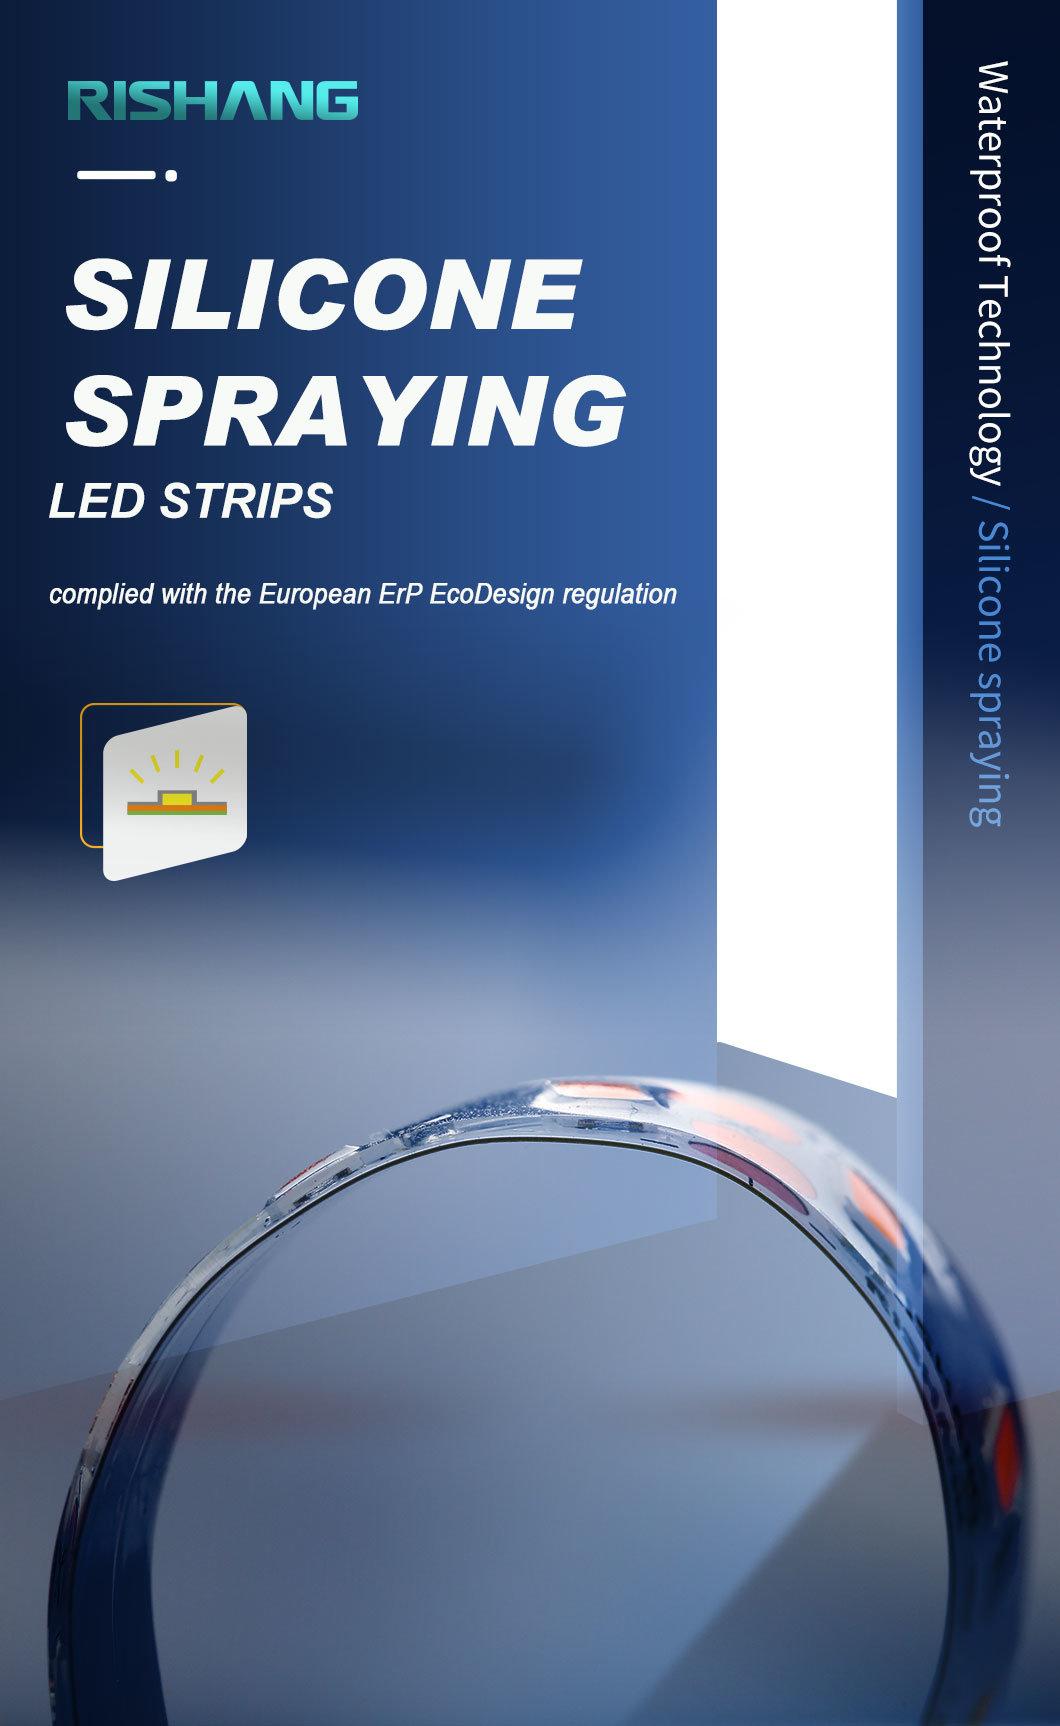 24V RoHS CE UL Transmittance 98% LED Strip Light High Brightness 2835 6W/M 60LEDs IP65 Waterproof Flexible LED Strip